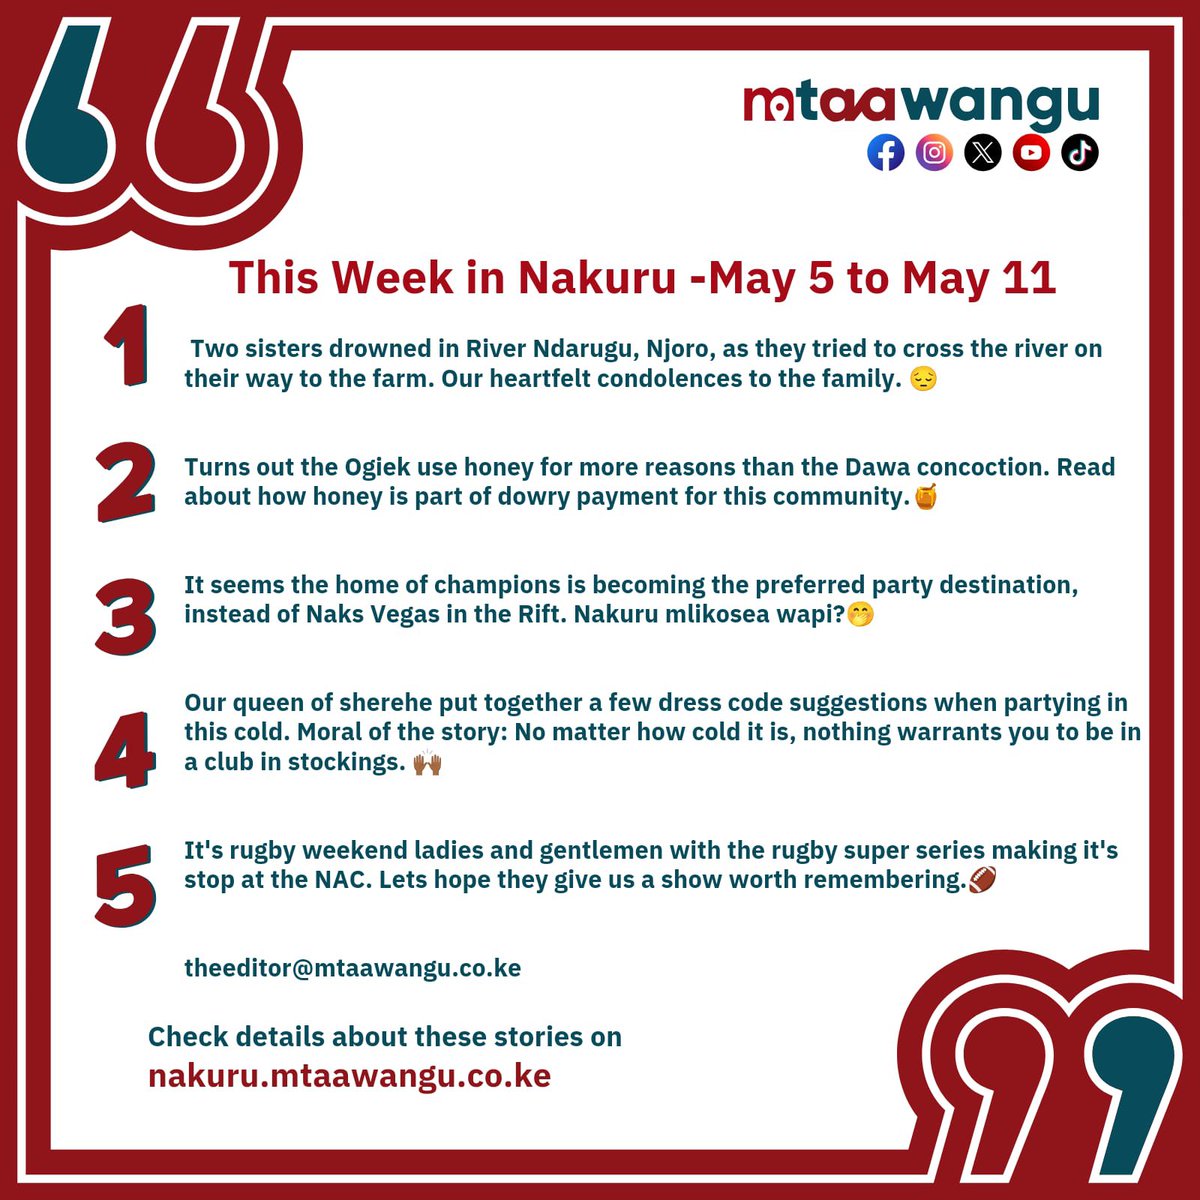 ICYMI: Here's what went down in Nakuru this week. nakuru.mtaawangu.co.ke/categories/wha… #NakuruMtaaWangu #Nakuru